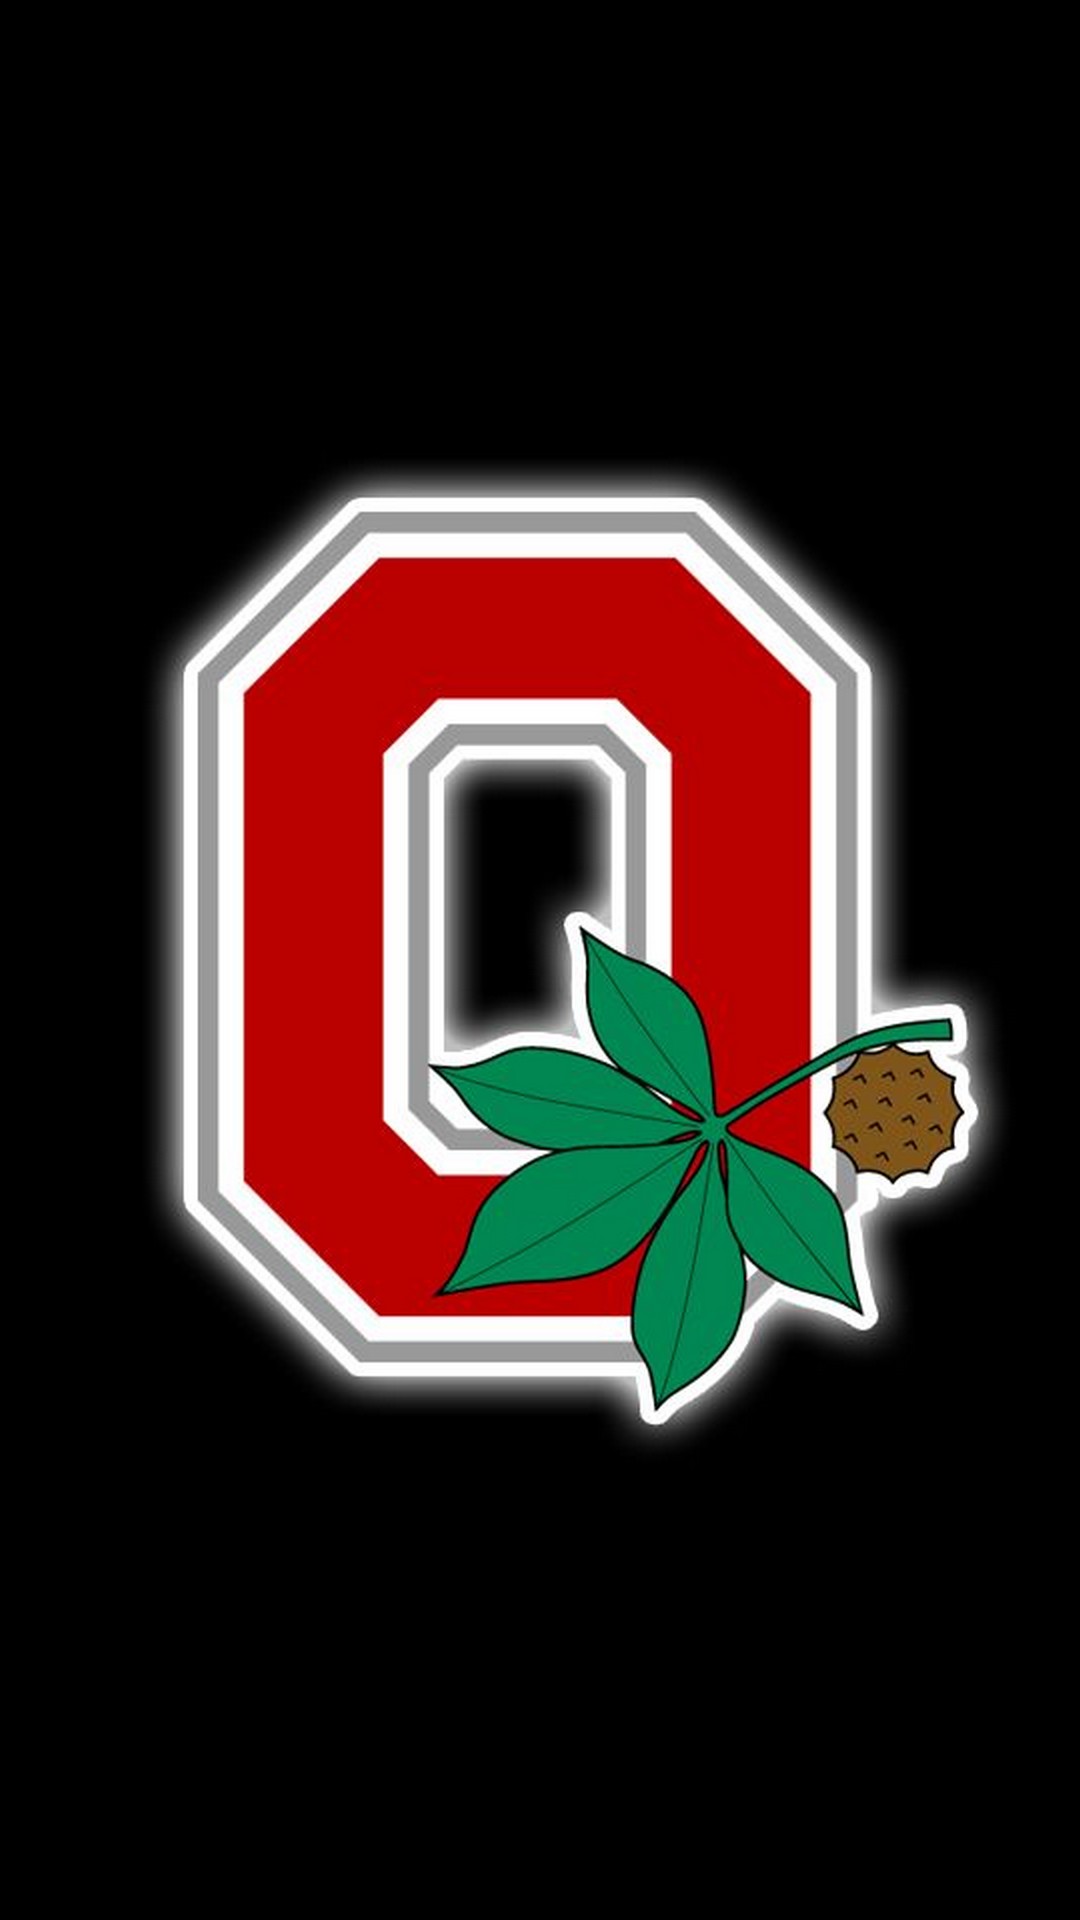 ohio state iphone wallpaper,green,leaf,red,illustration,emblem